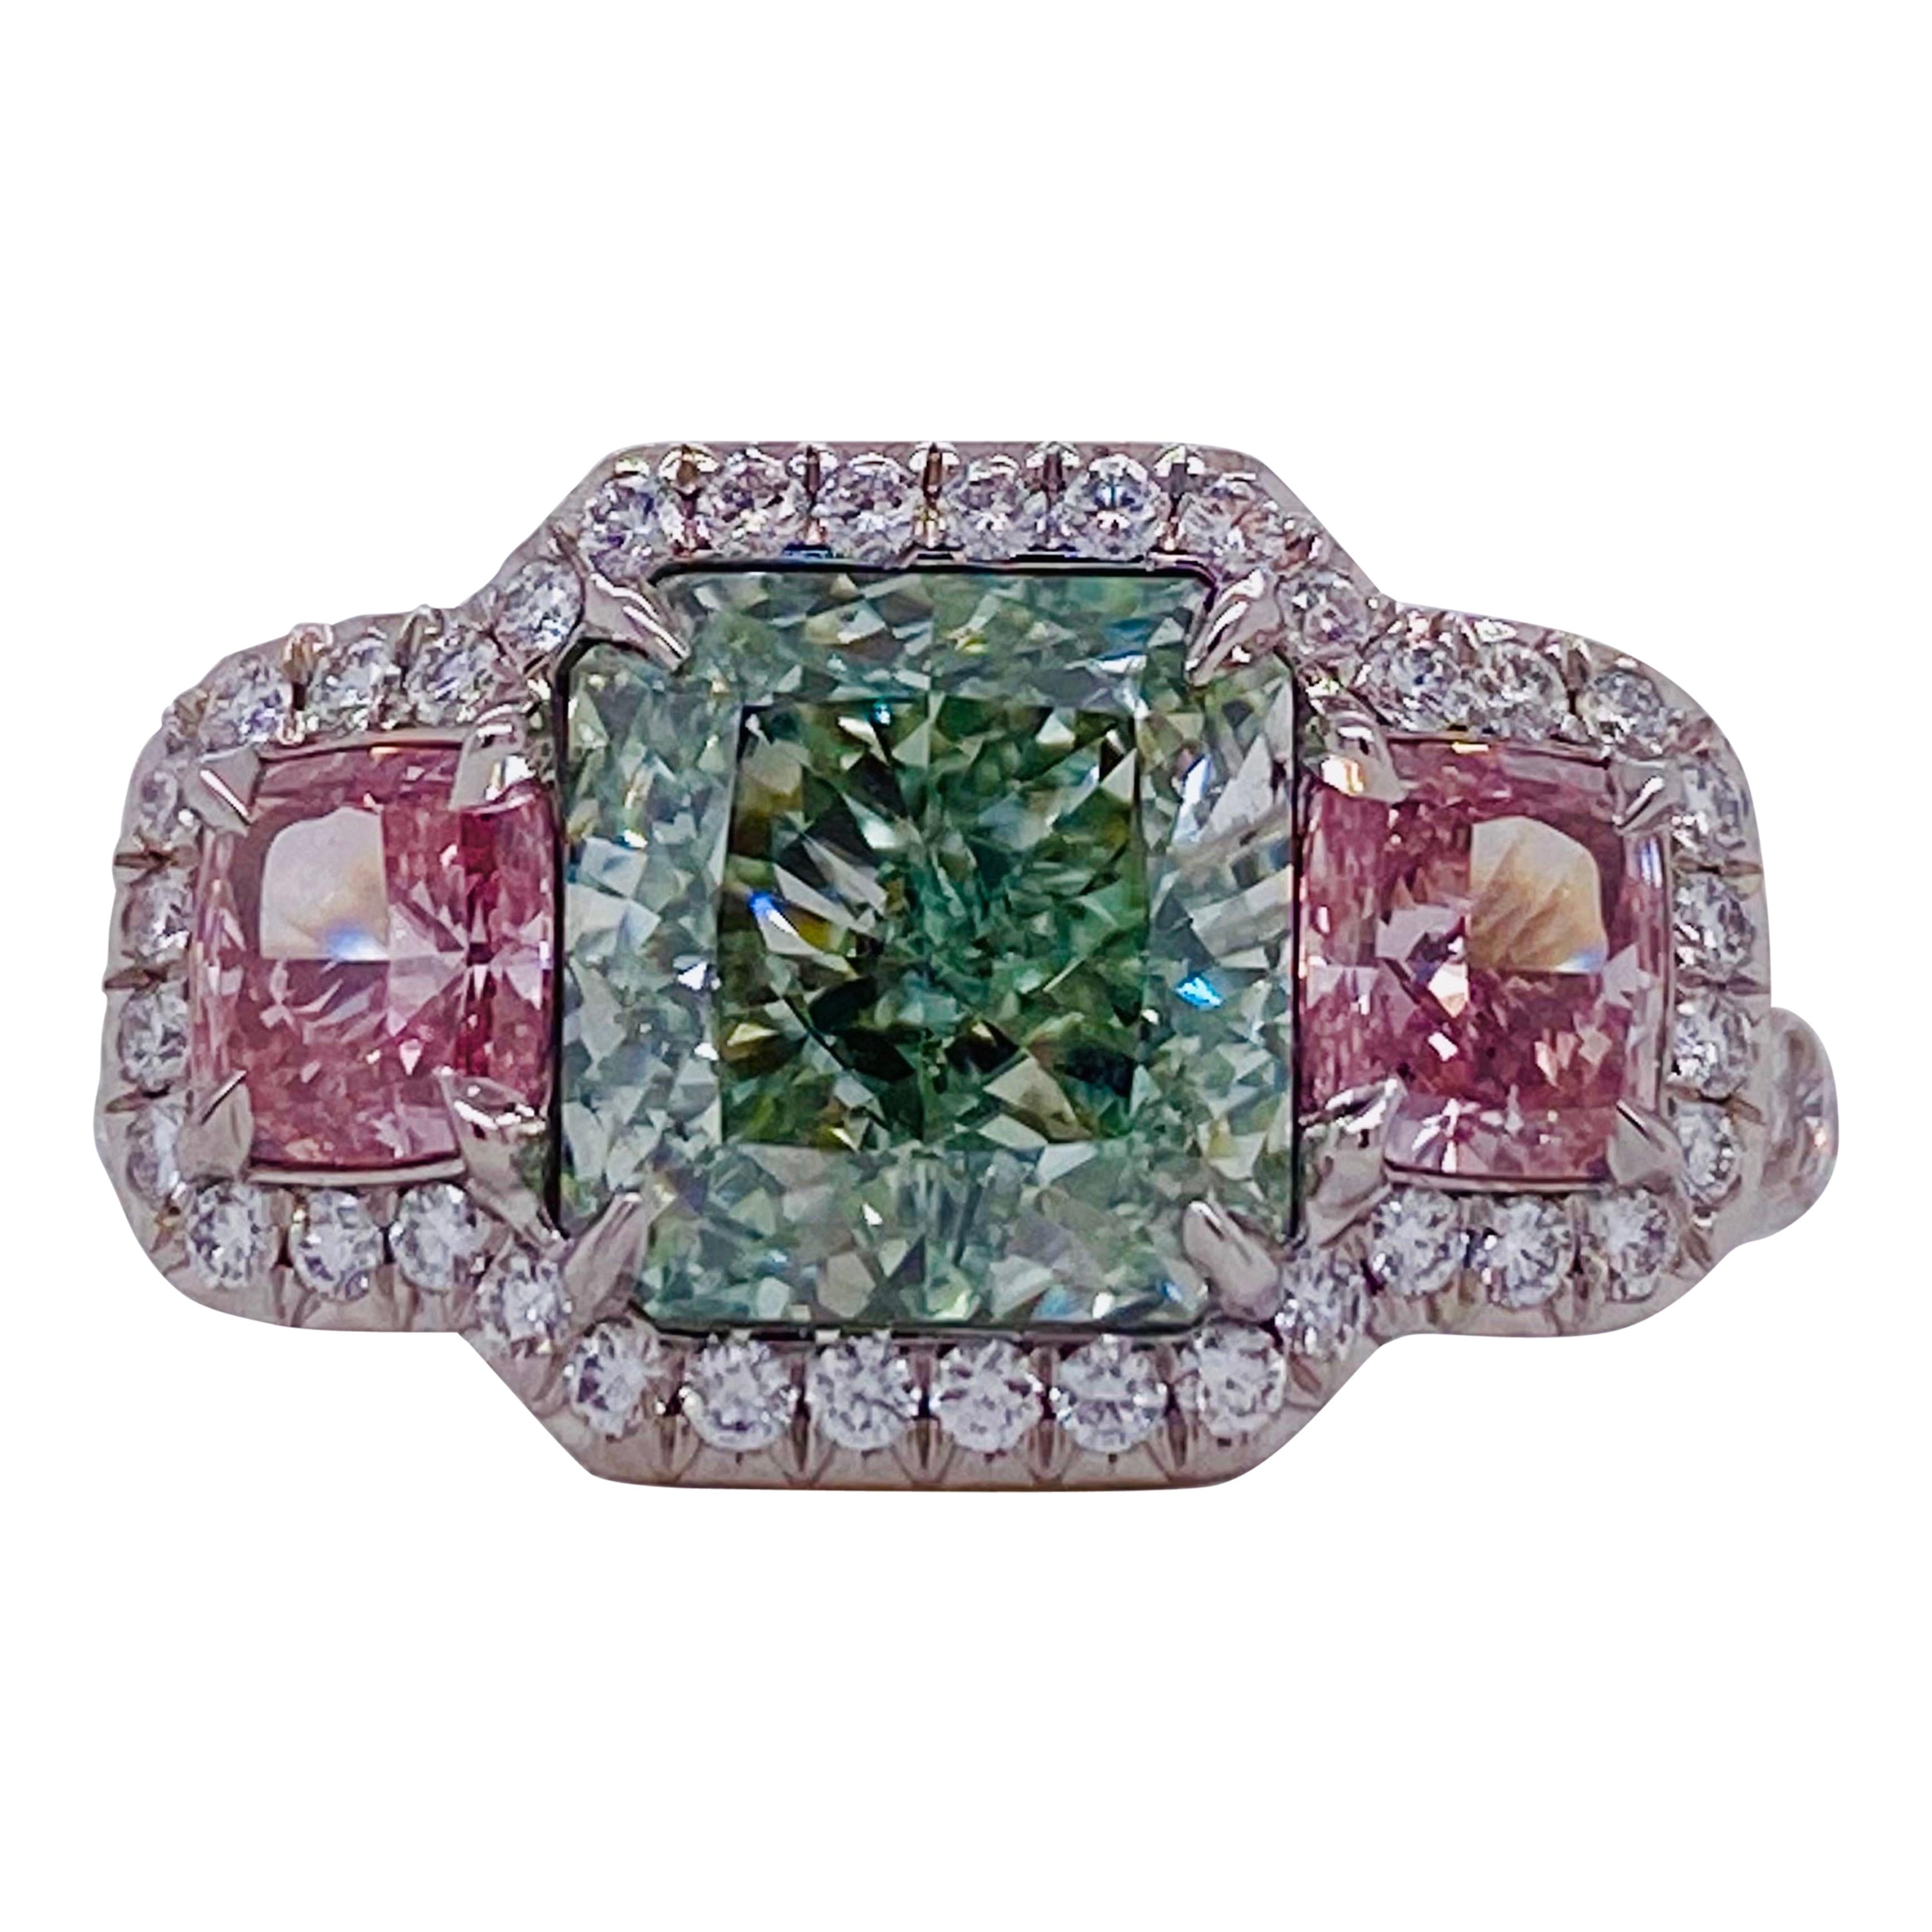 Emilio Jewelry GIA Certified Fancy Intense Pure Green Diamond Ring